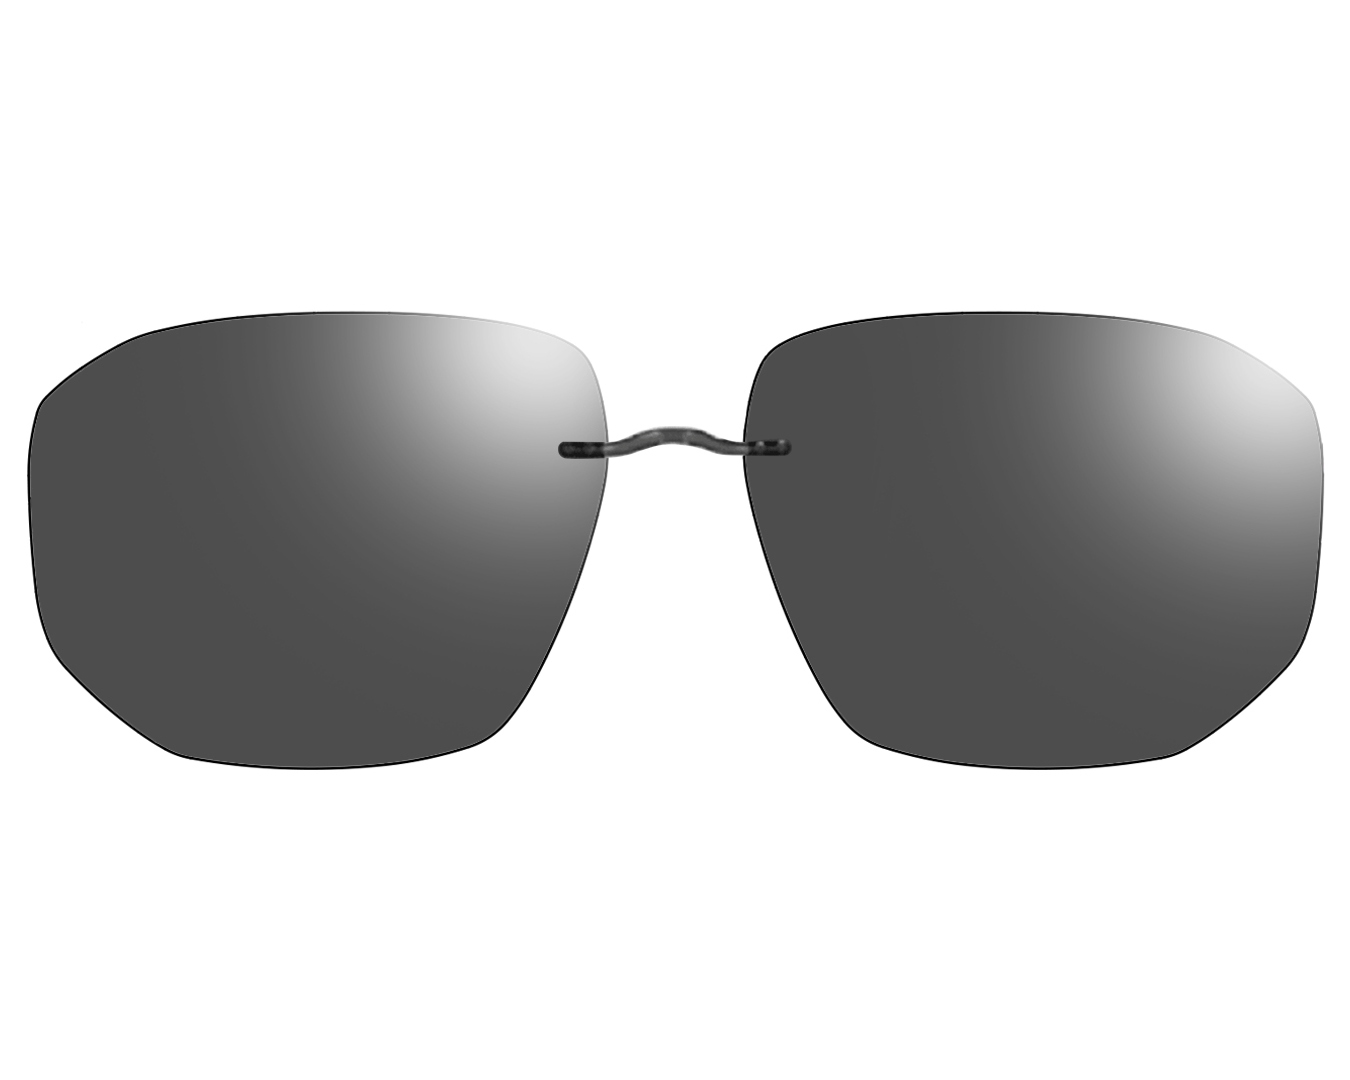 Men's Sunglasses from Silhouette » Buy Online